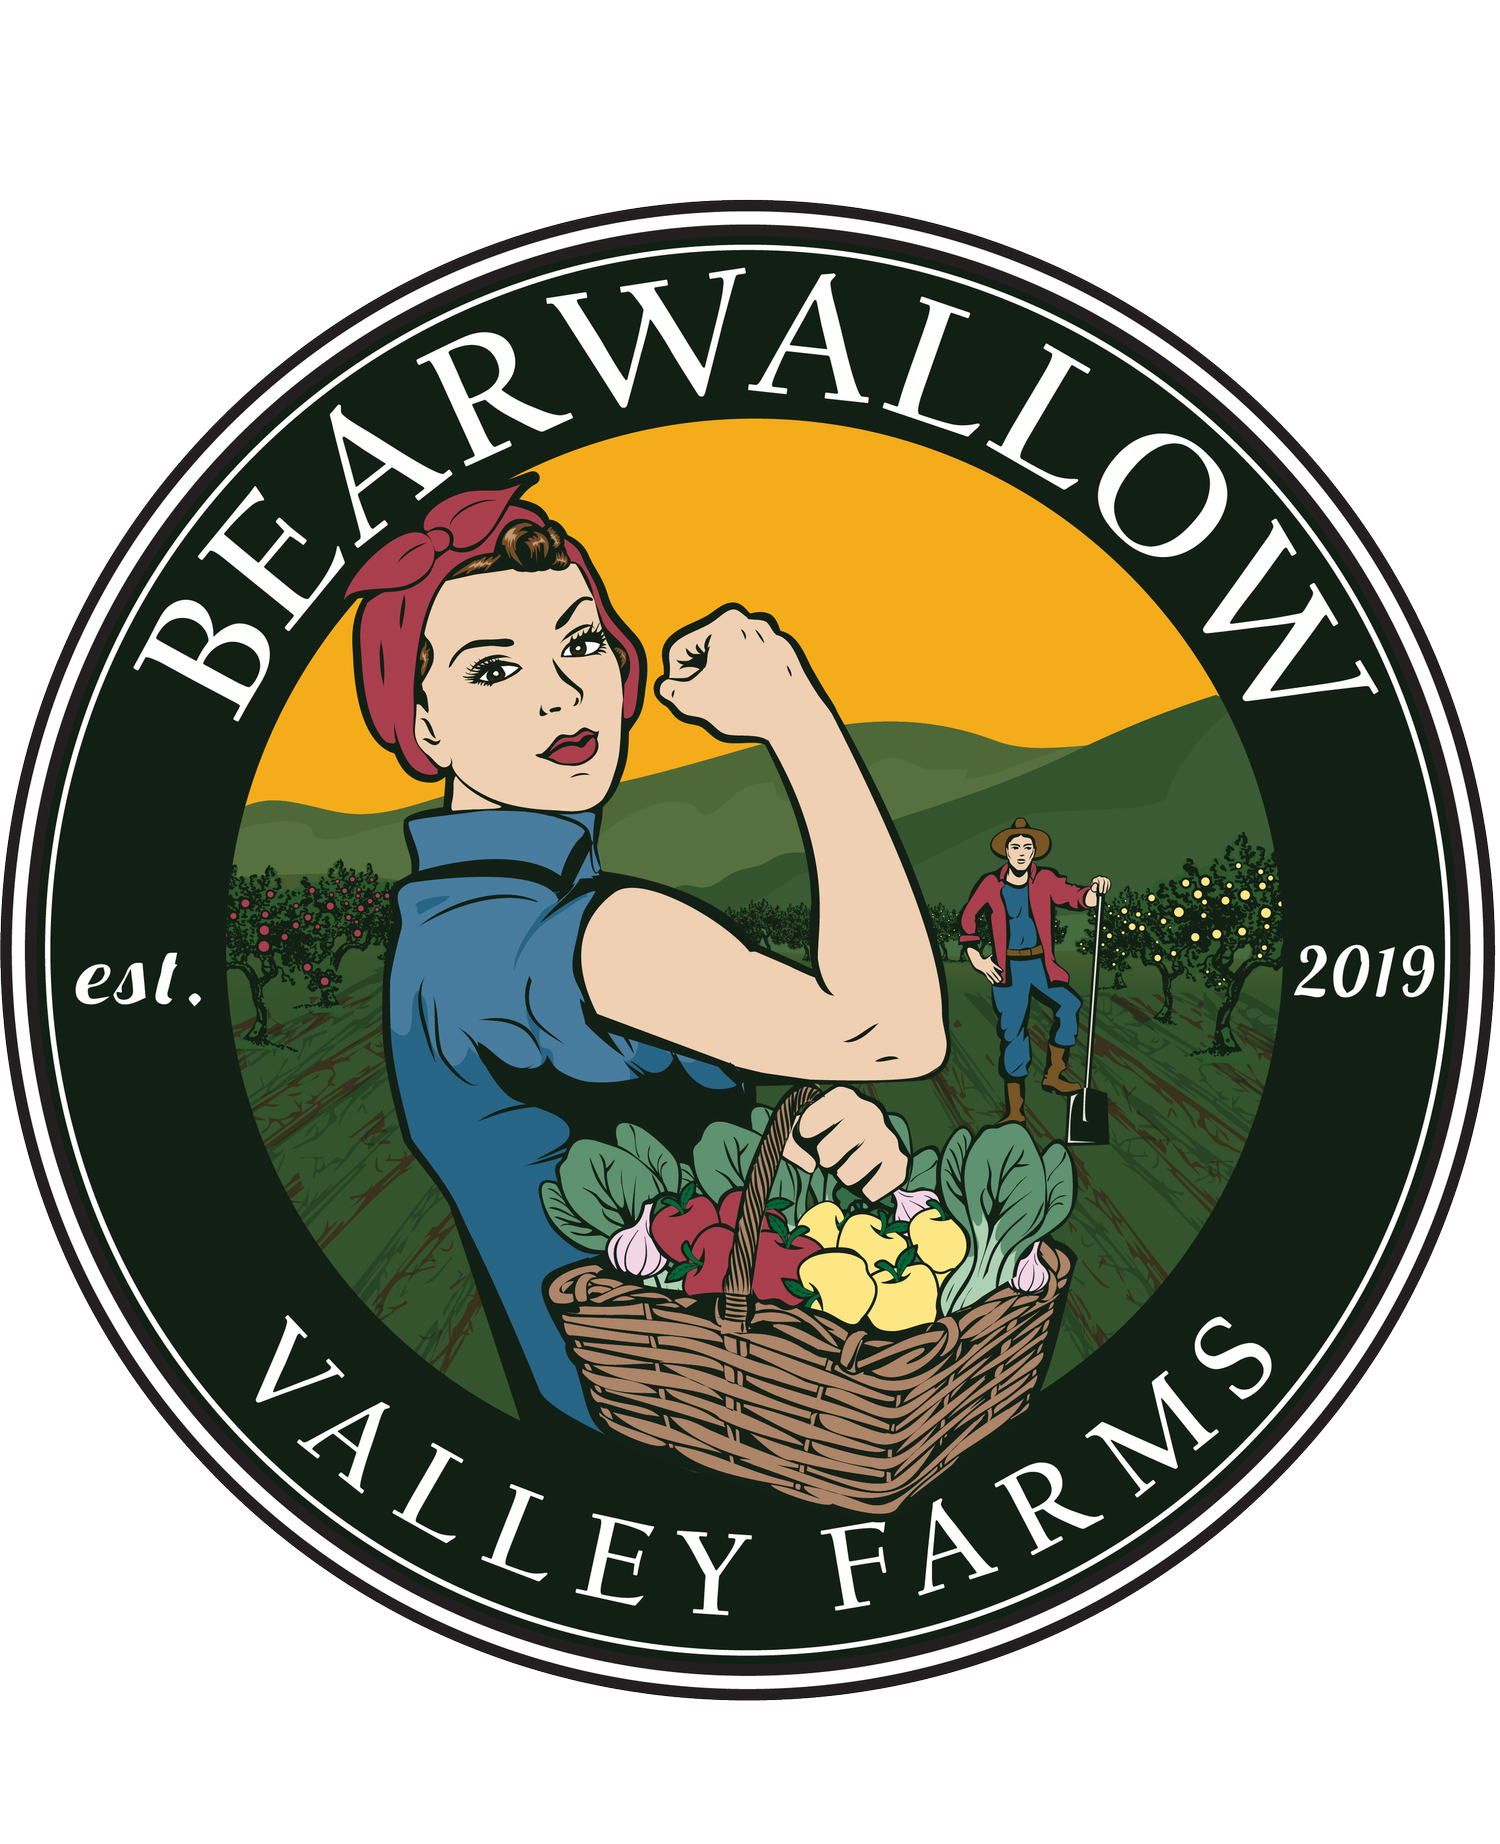 Bearwallow farm